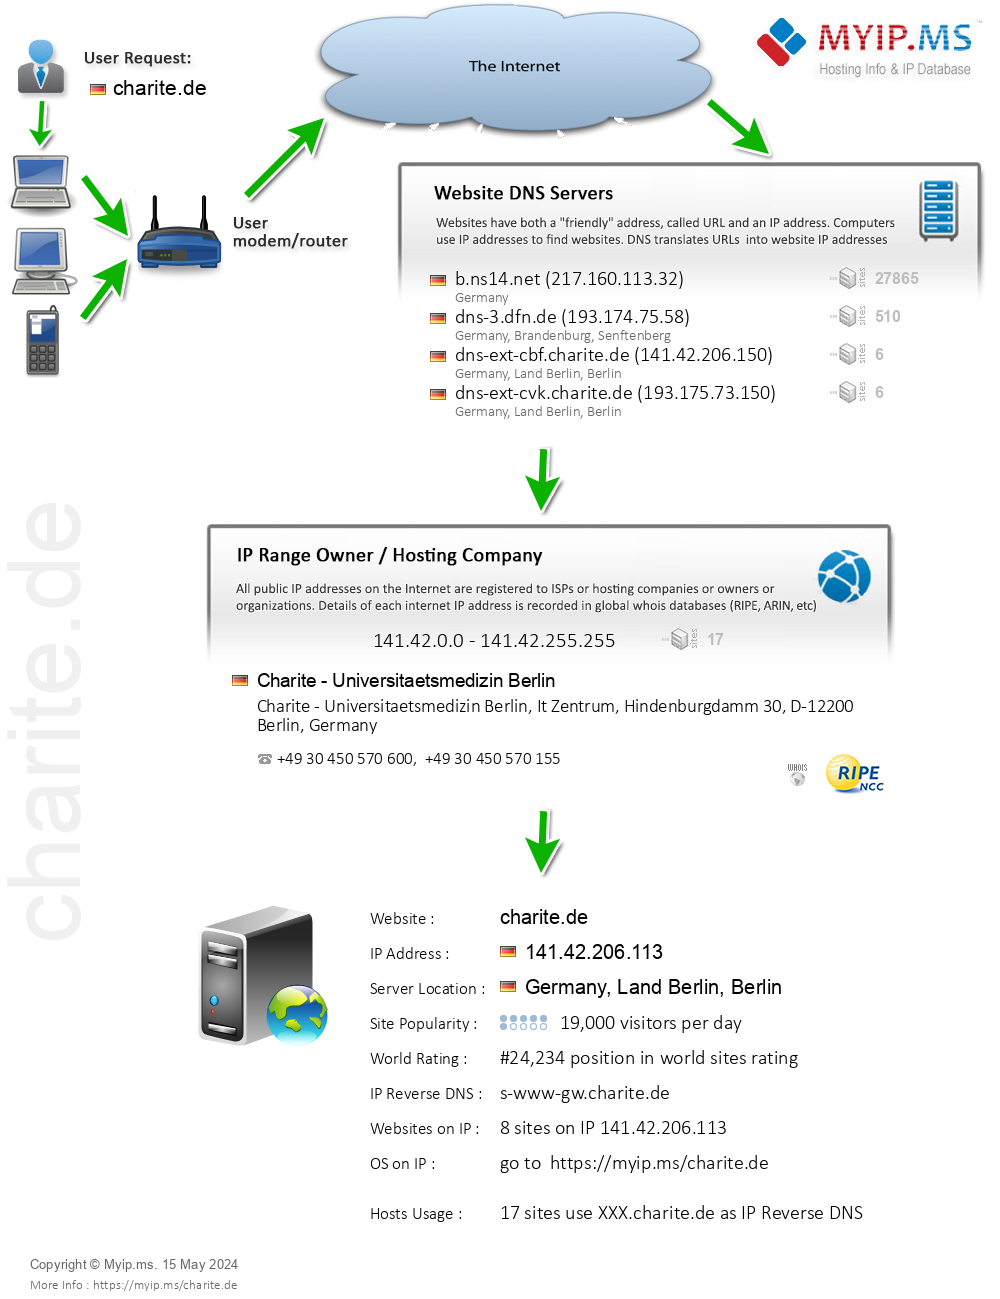 Charite.de - Website Hosting Visual IP Diagram